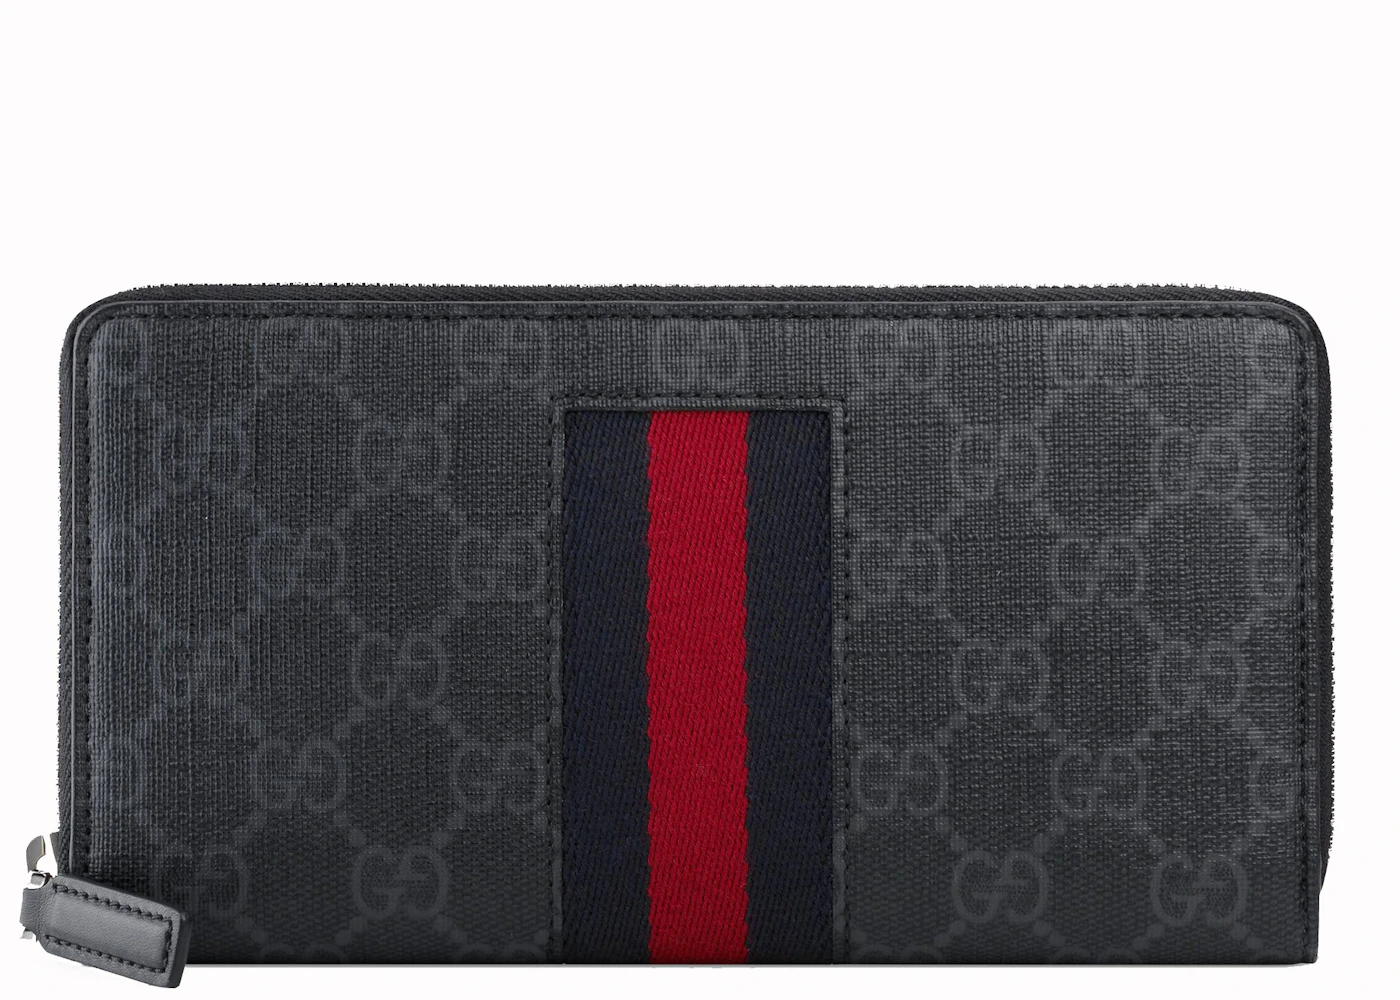 Gucci GG Supreme Round Zipper Long Wallet